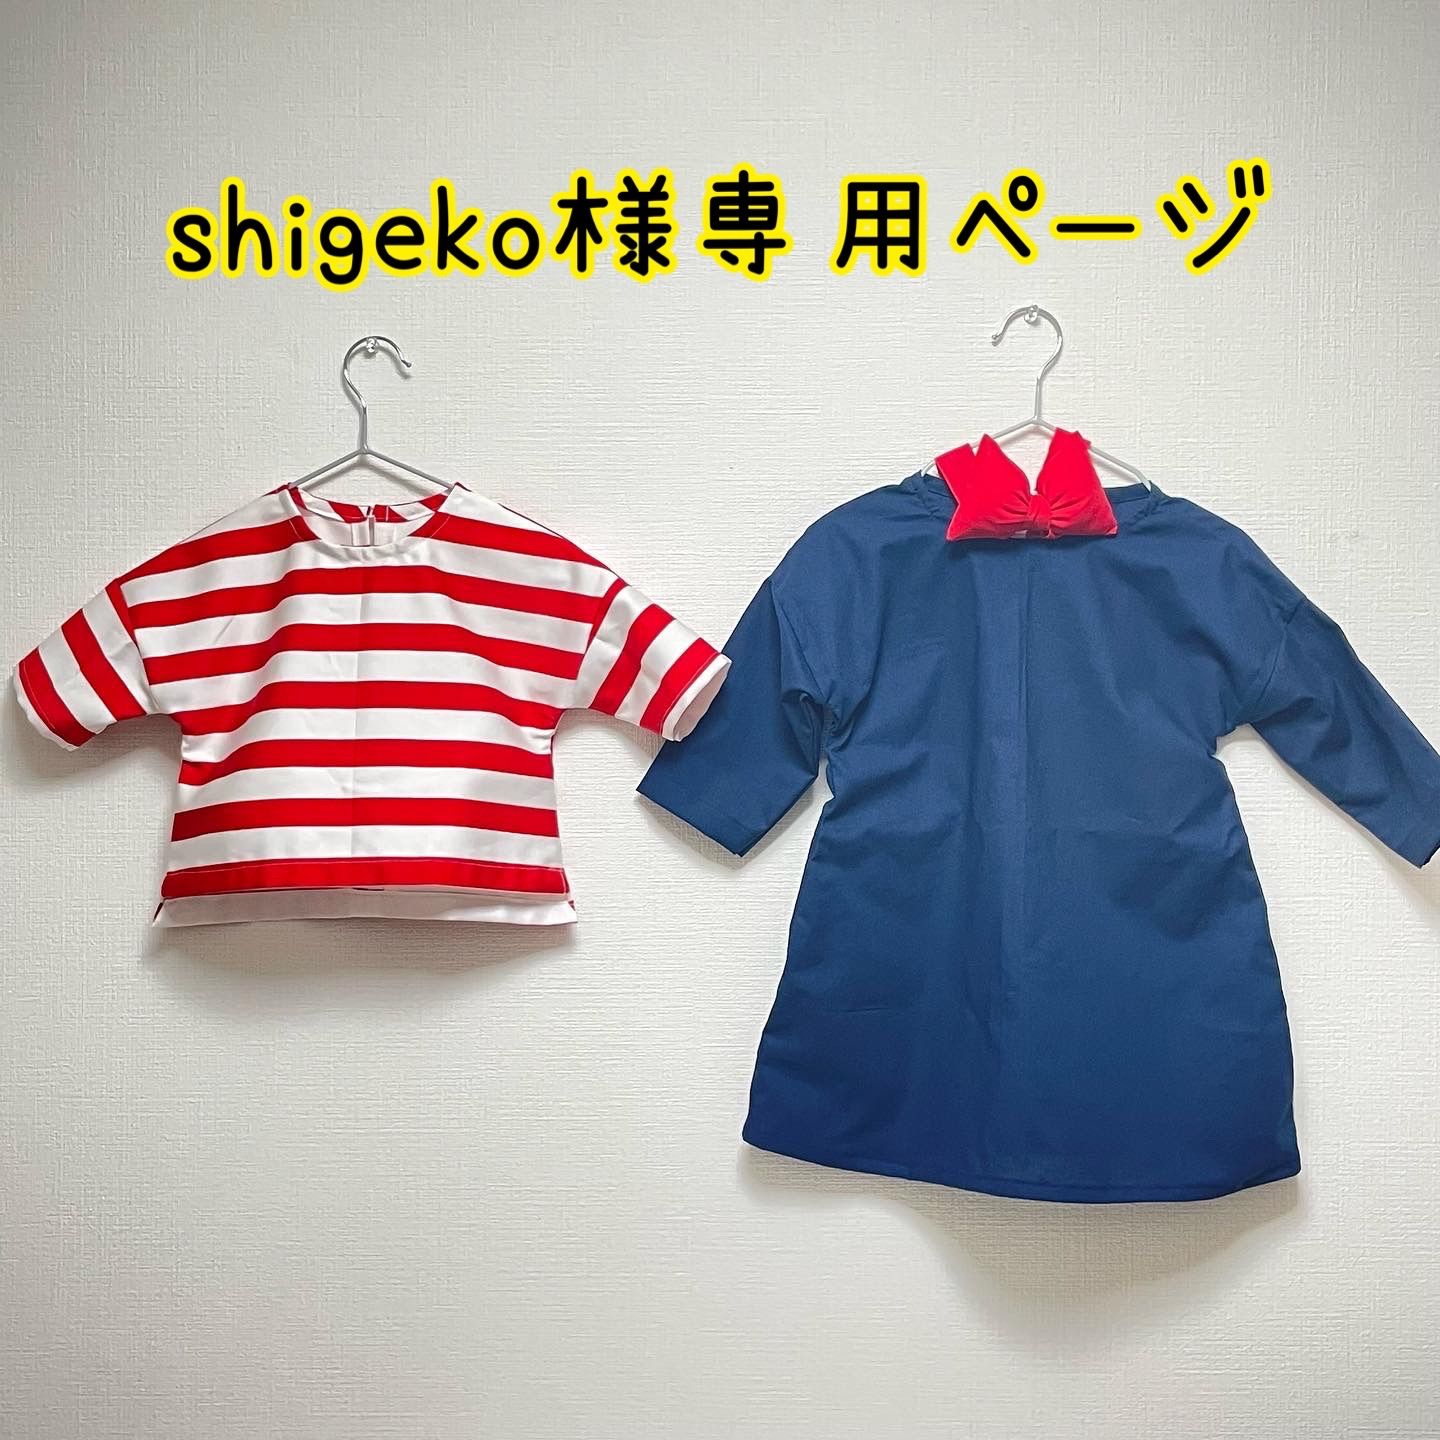 shigeko様専用 キキトンボセット - メルカリ